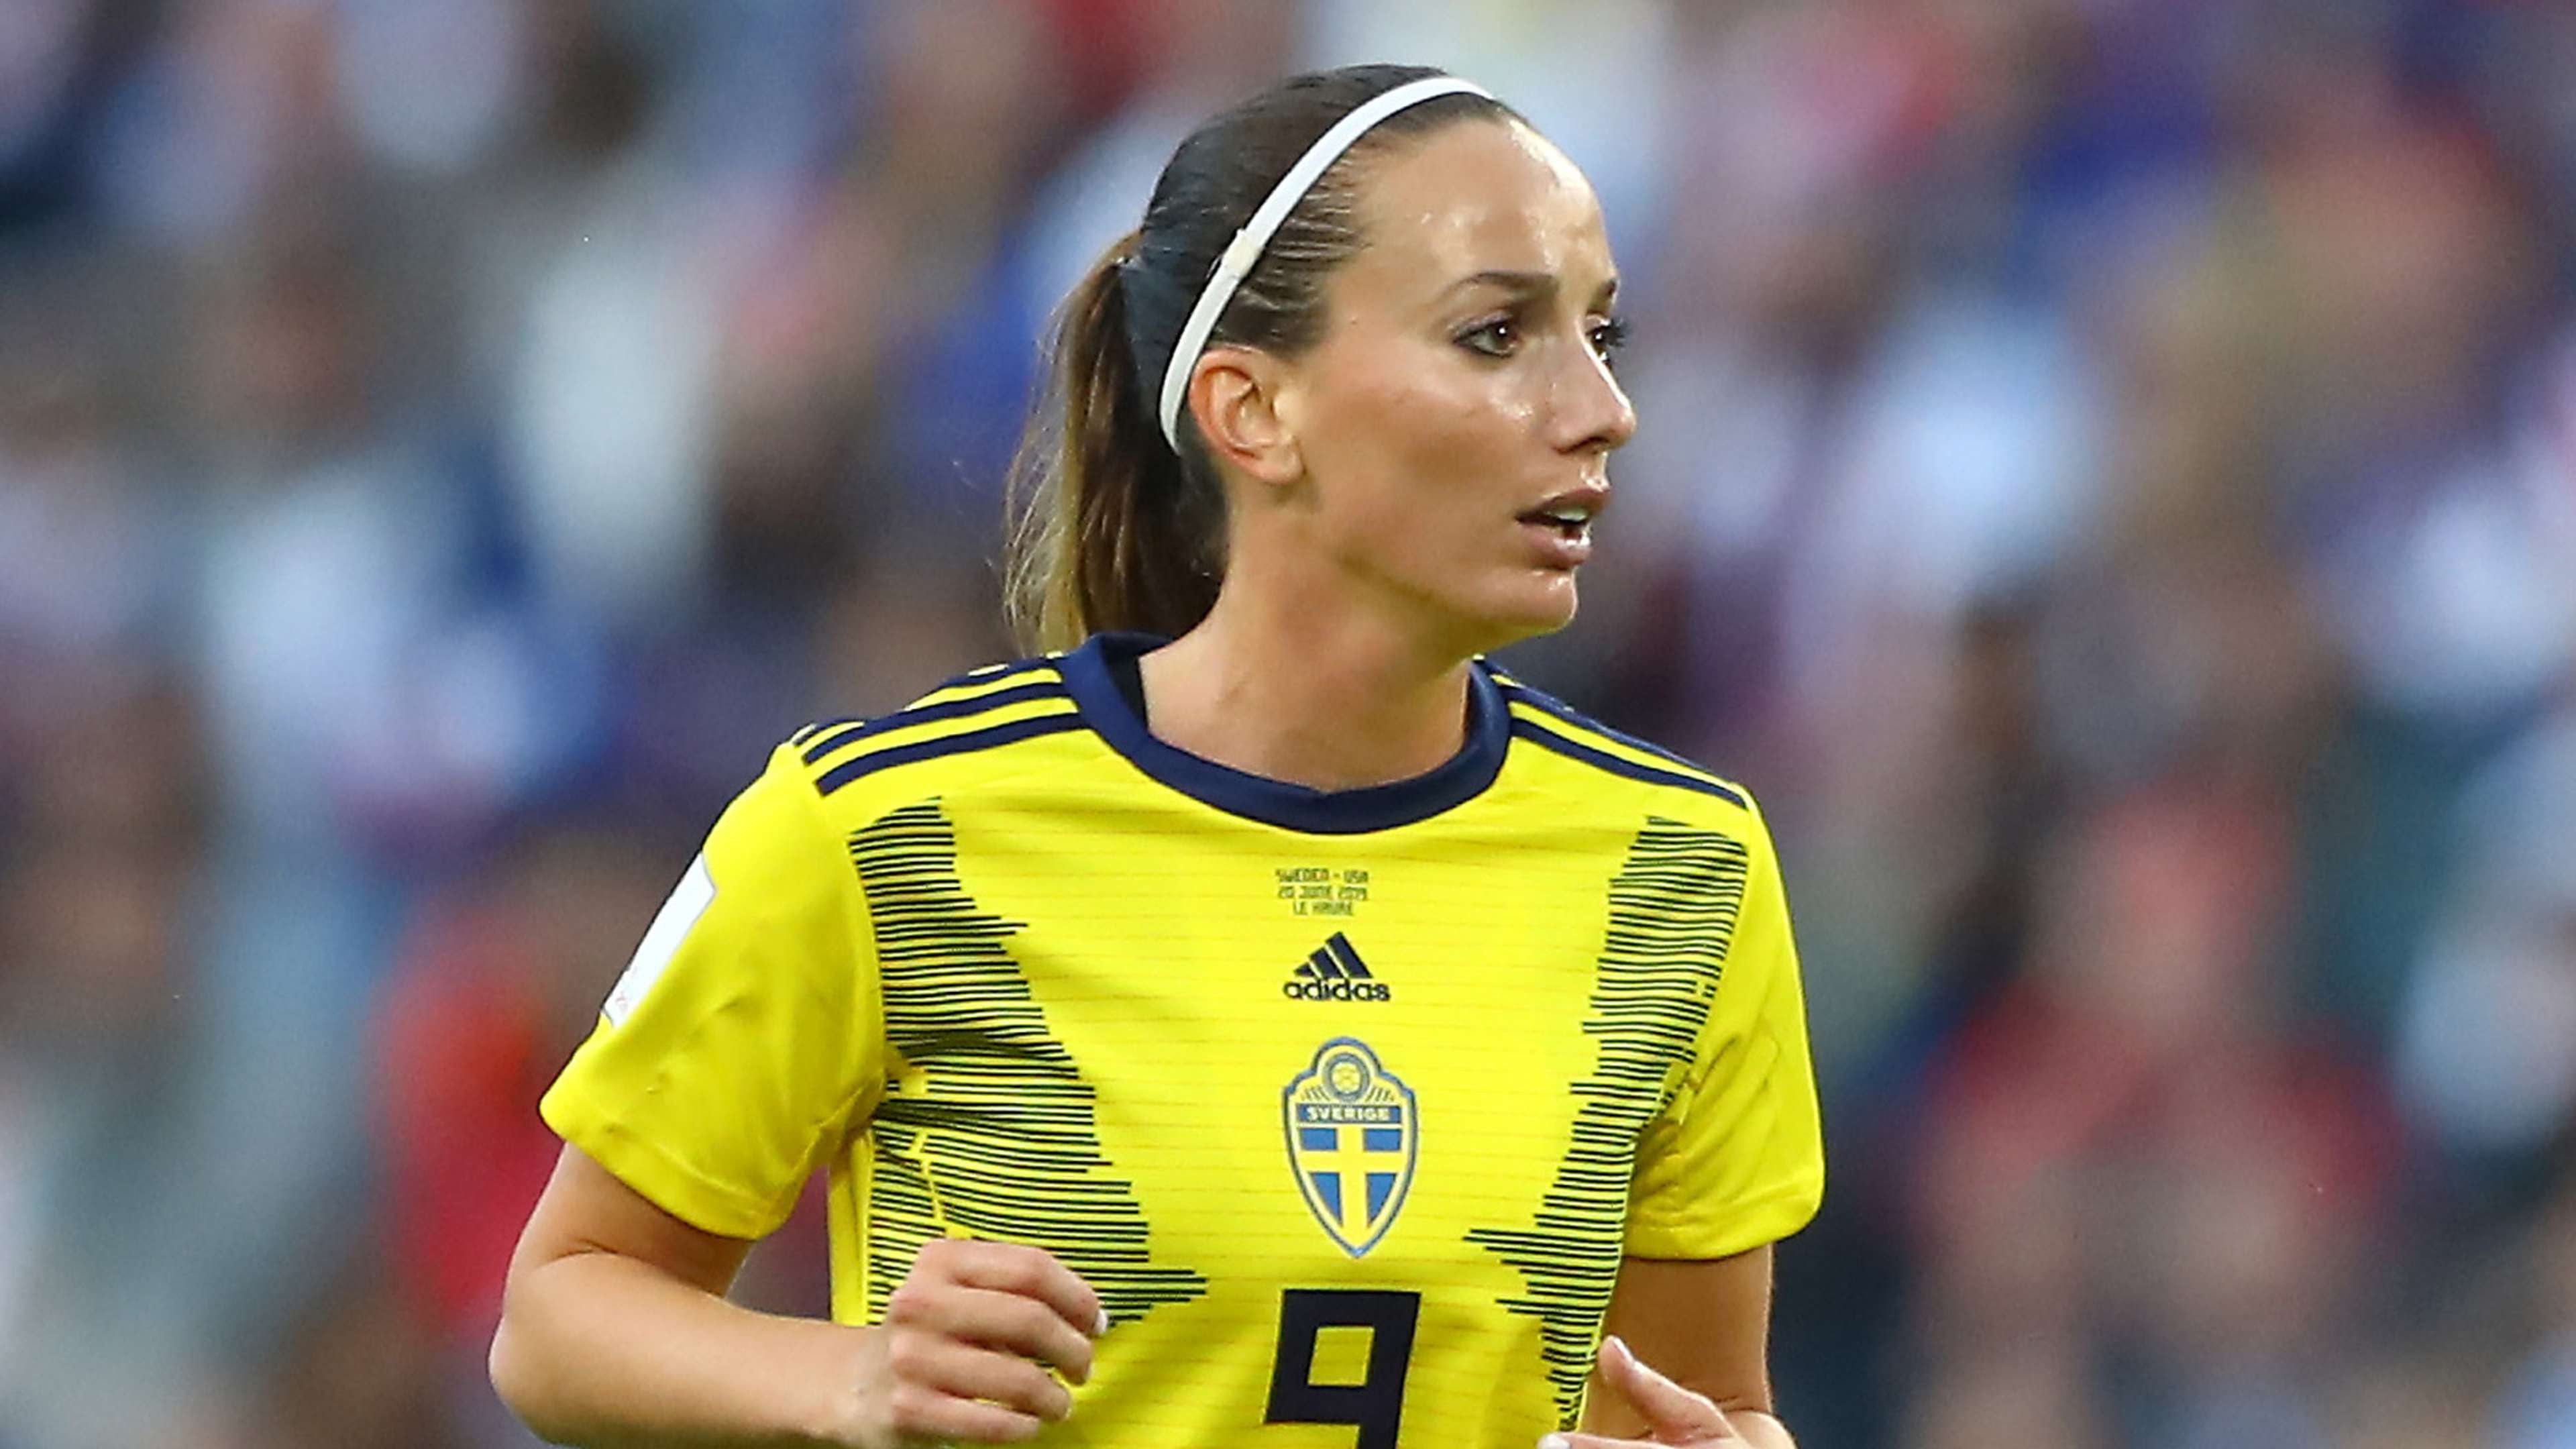 Kosovare Asllani Sweden Women's World Cup 2019